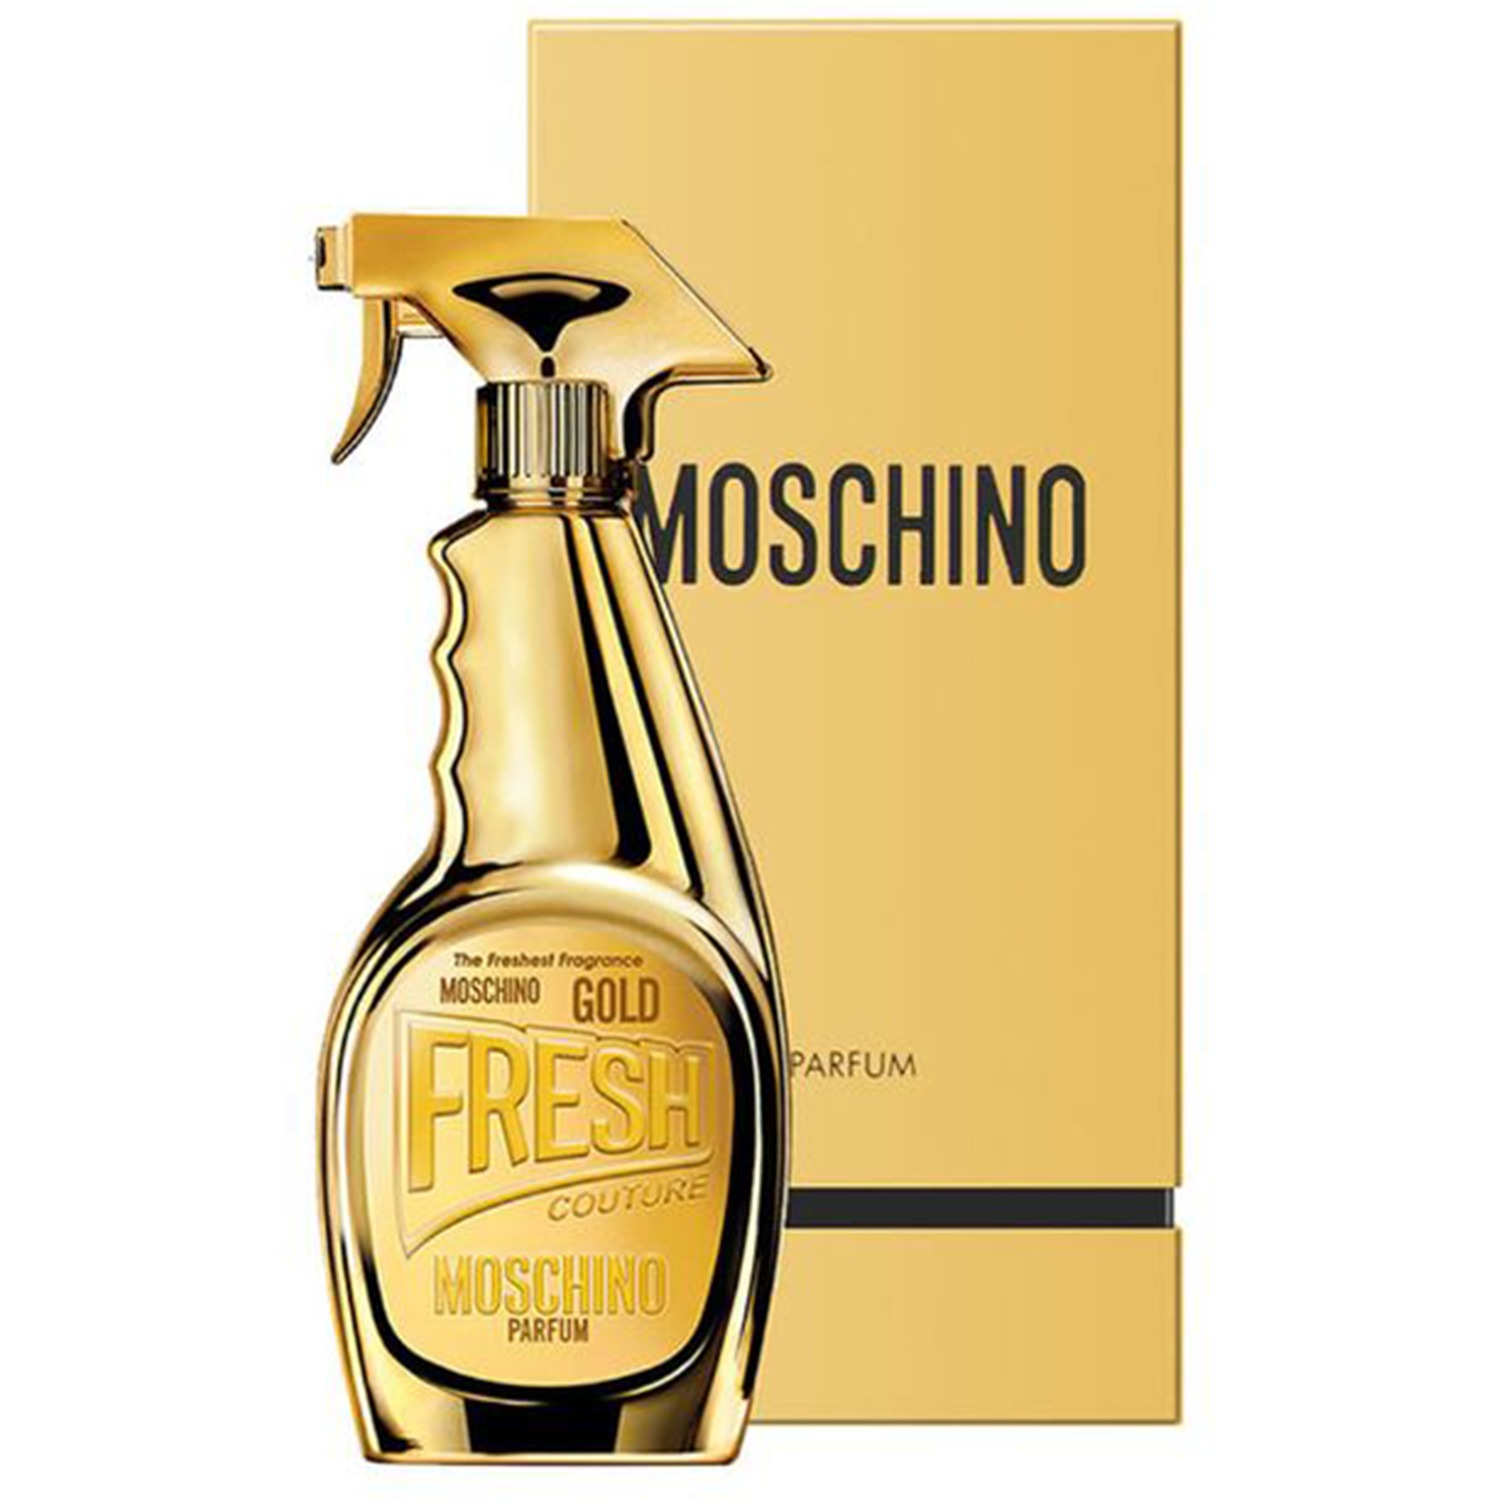 Moschino fresh gold. Moschino Fresh Gold 100 мл. Moschino Fresh Couture. Moschino Fresh Couture 100 ml. Moschino Fresh туалетная вода 30 мл.